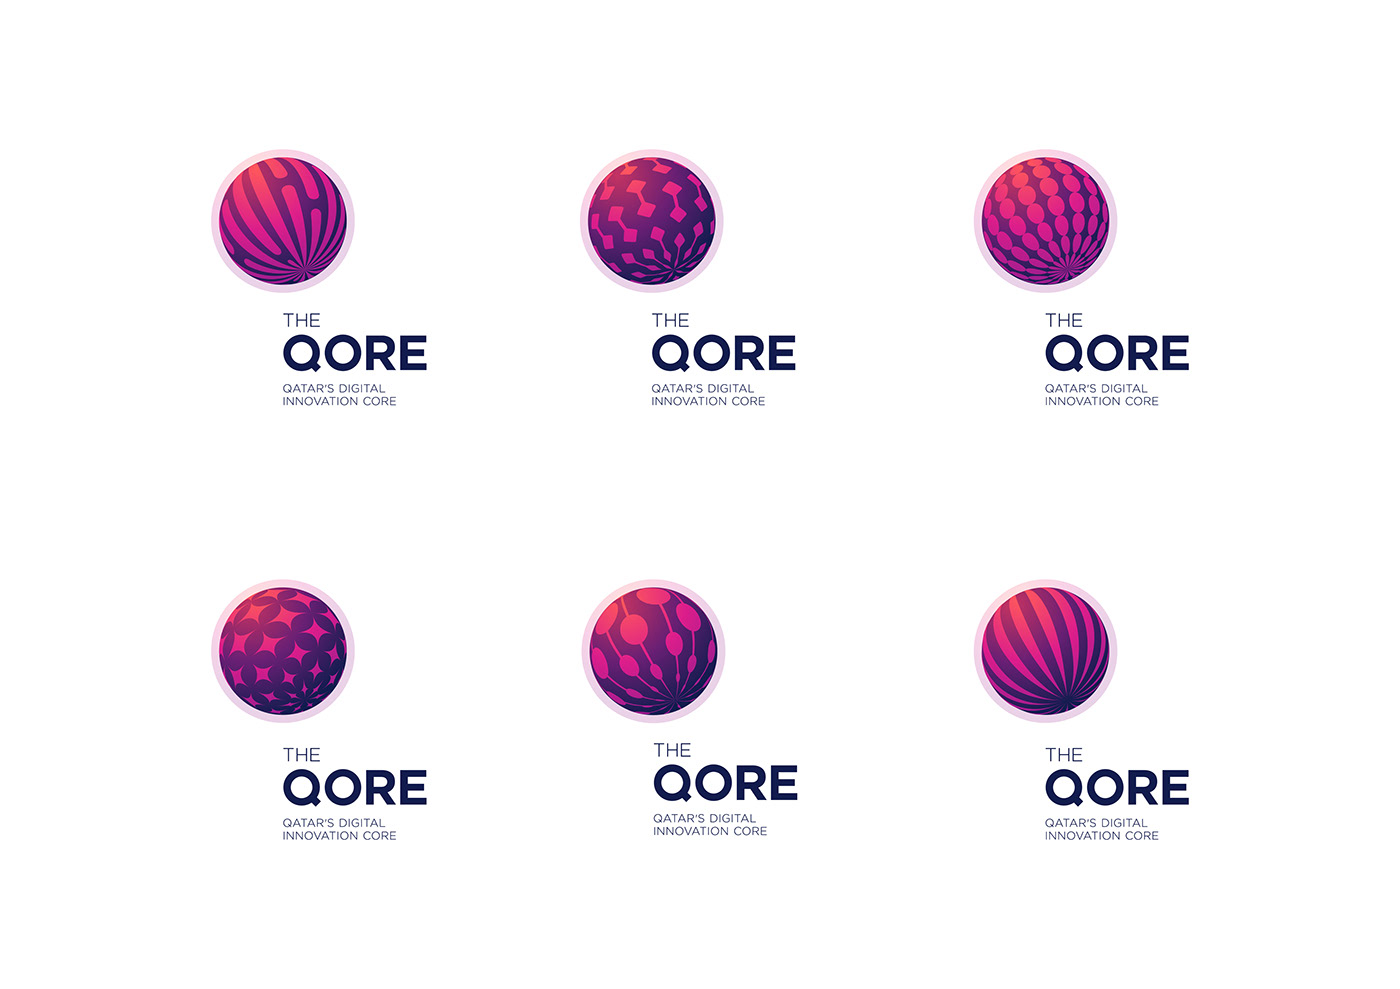 core Qore Qatar center Technology Hub innovation venture Startup research